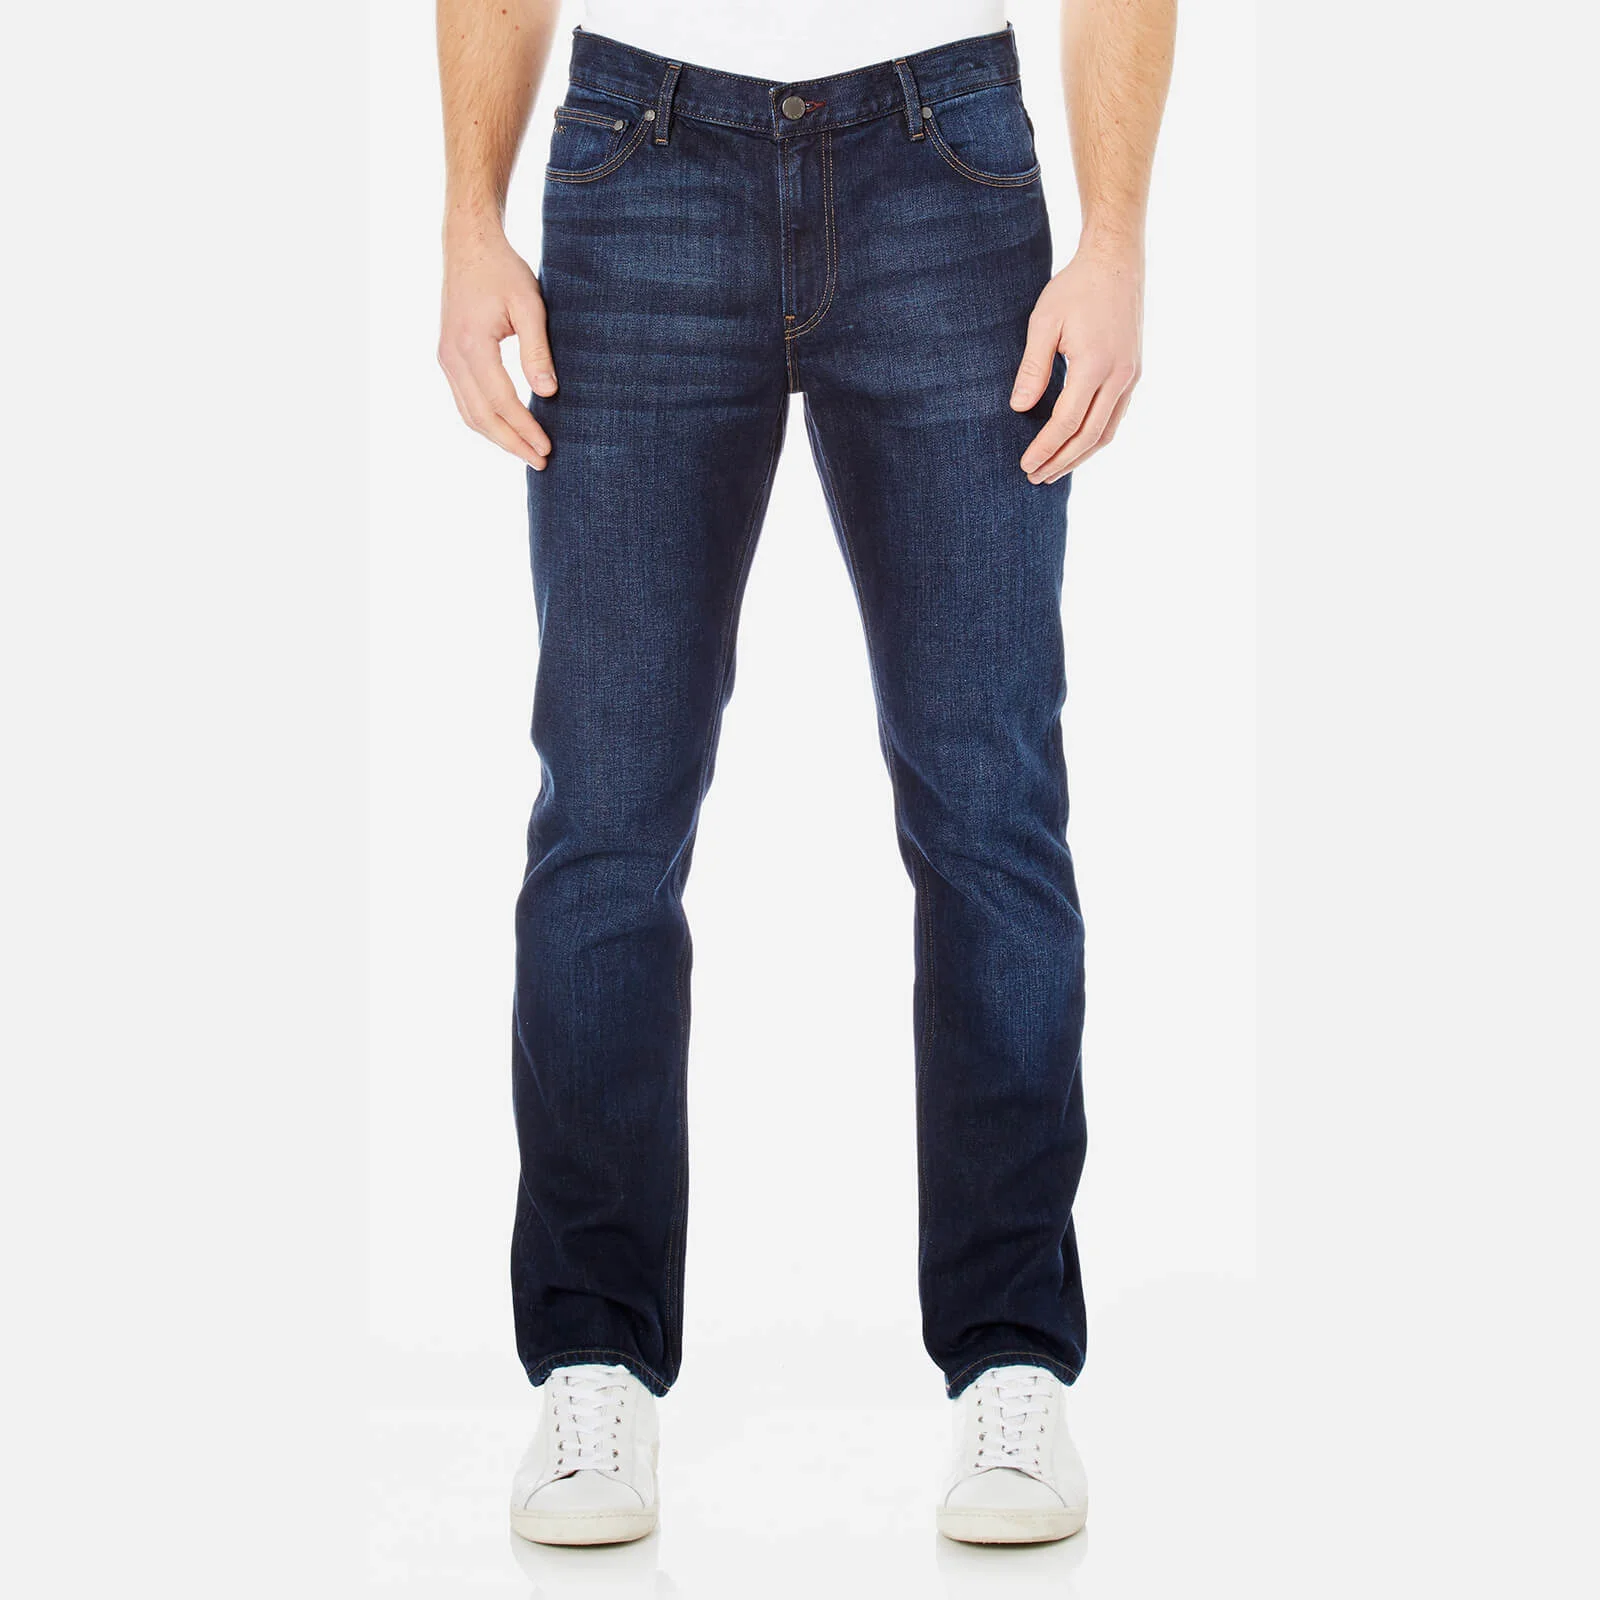 Michael Kors Men's Slim Indigo Jeans - Hampton Indigo Image 1